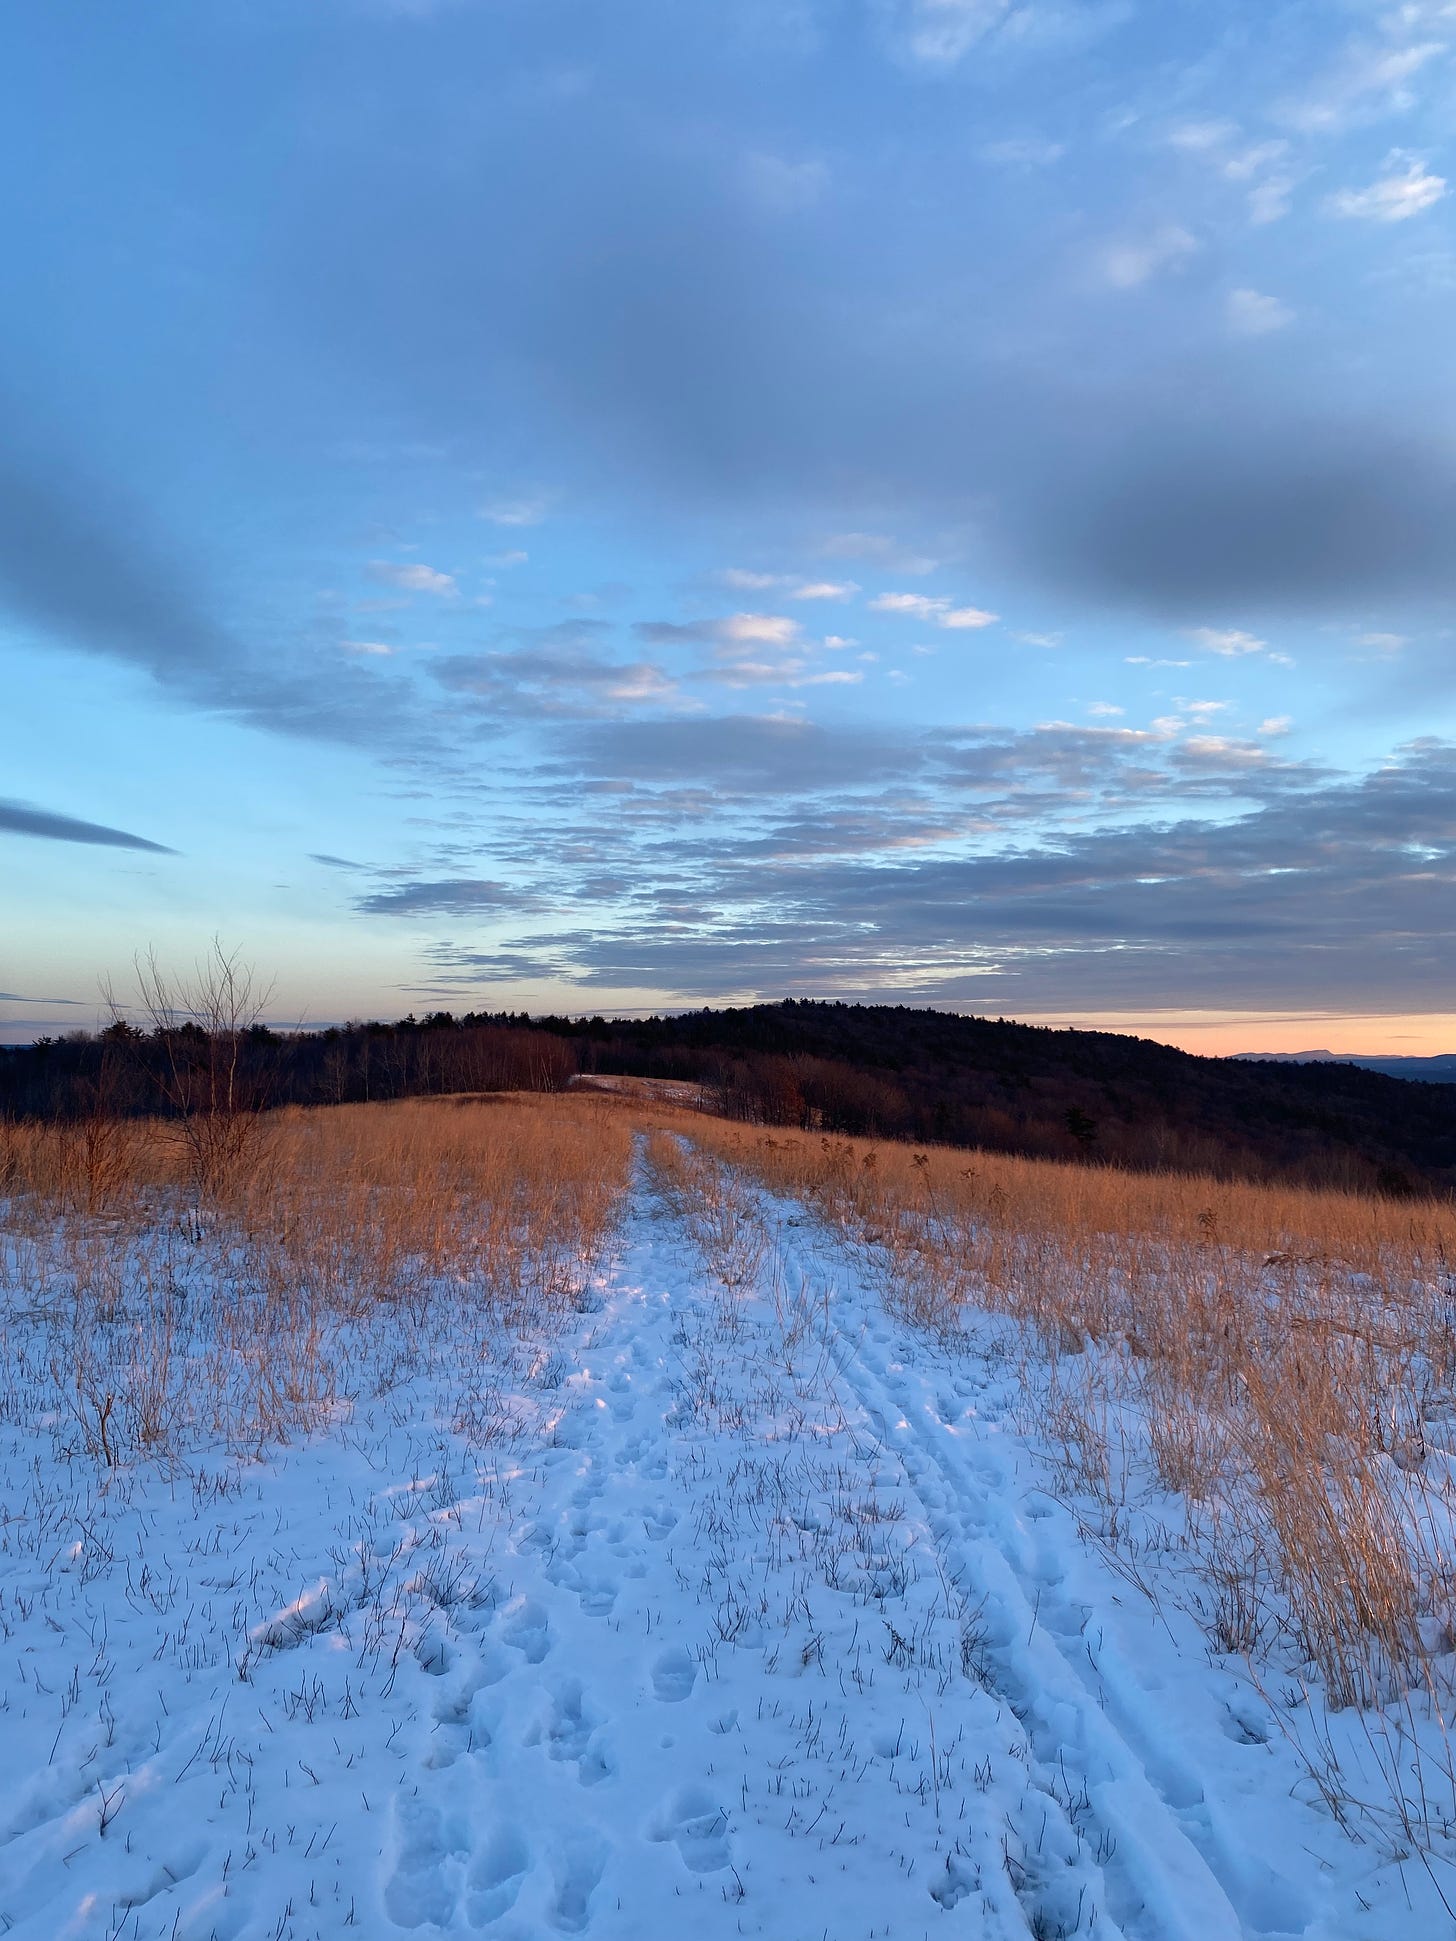 A snowy path through golden grass on the ridgetop at sunset. 